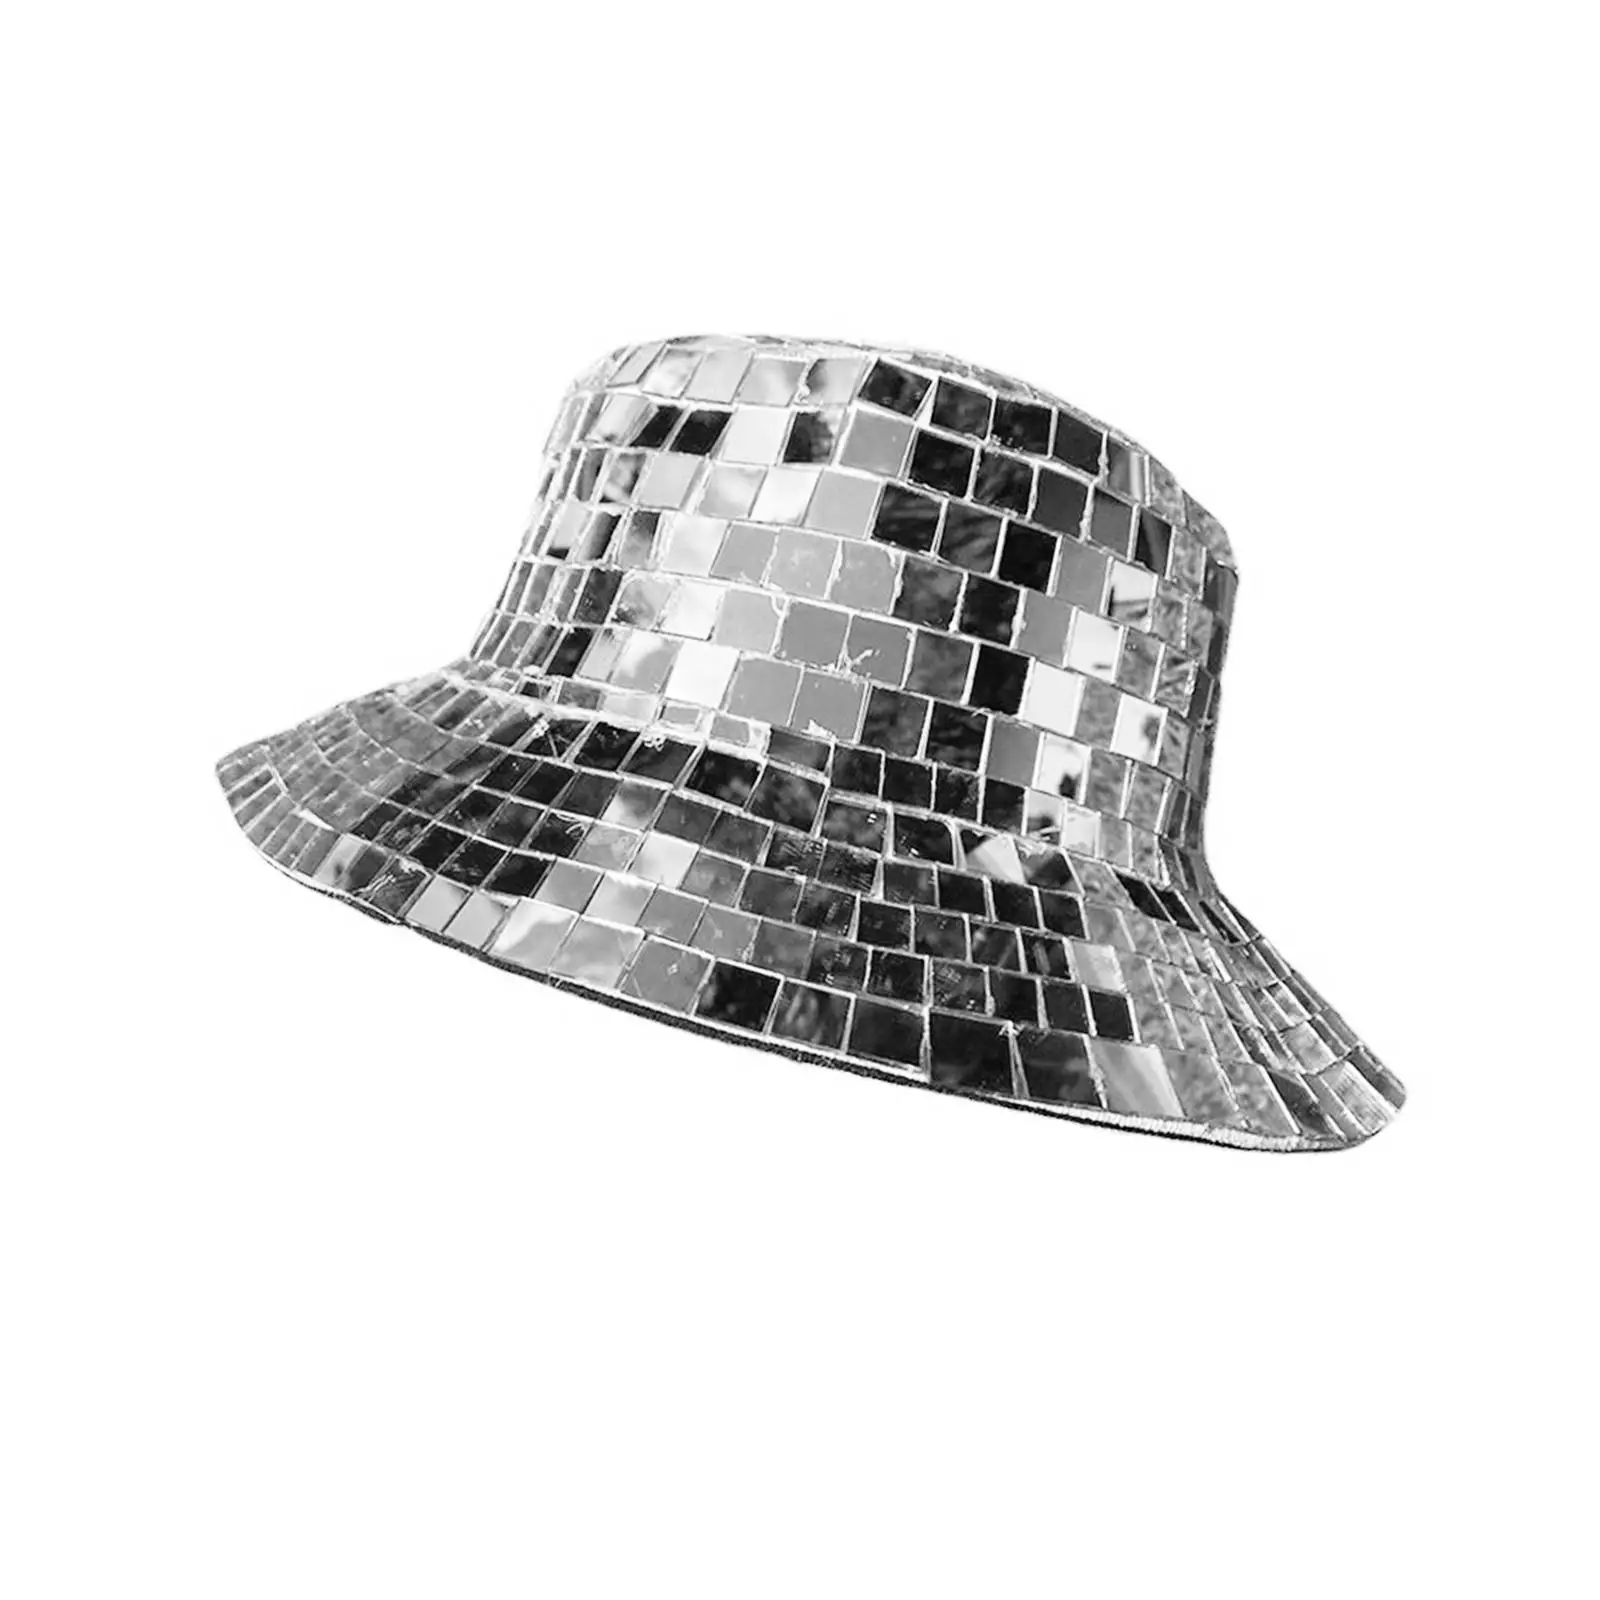 Disco Bucket Hat Decorative Stylish Beach Caps for Vocations Festivals Trips